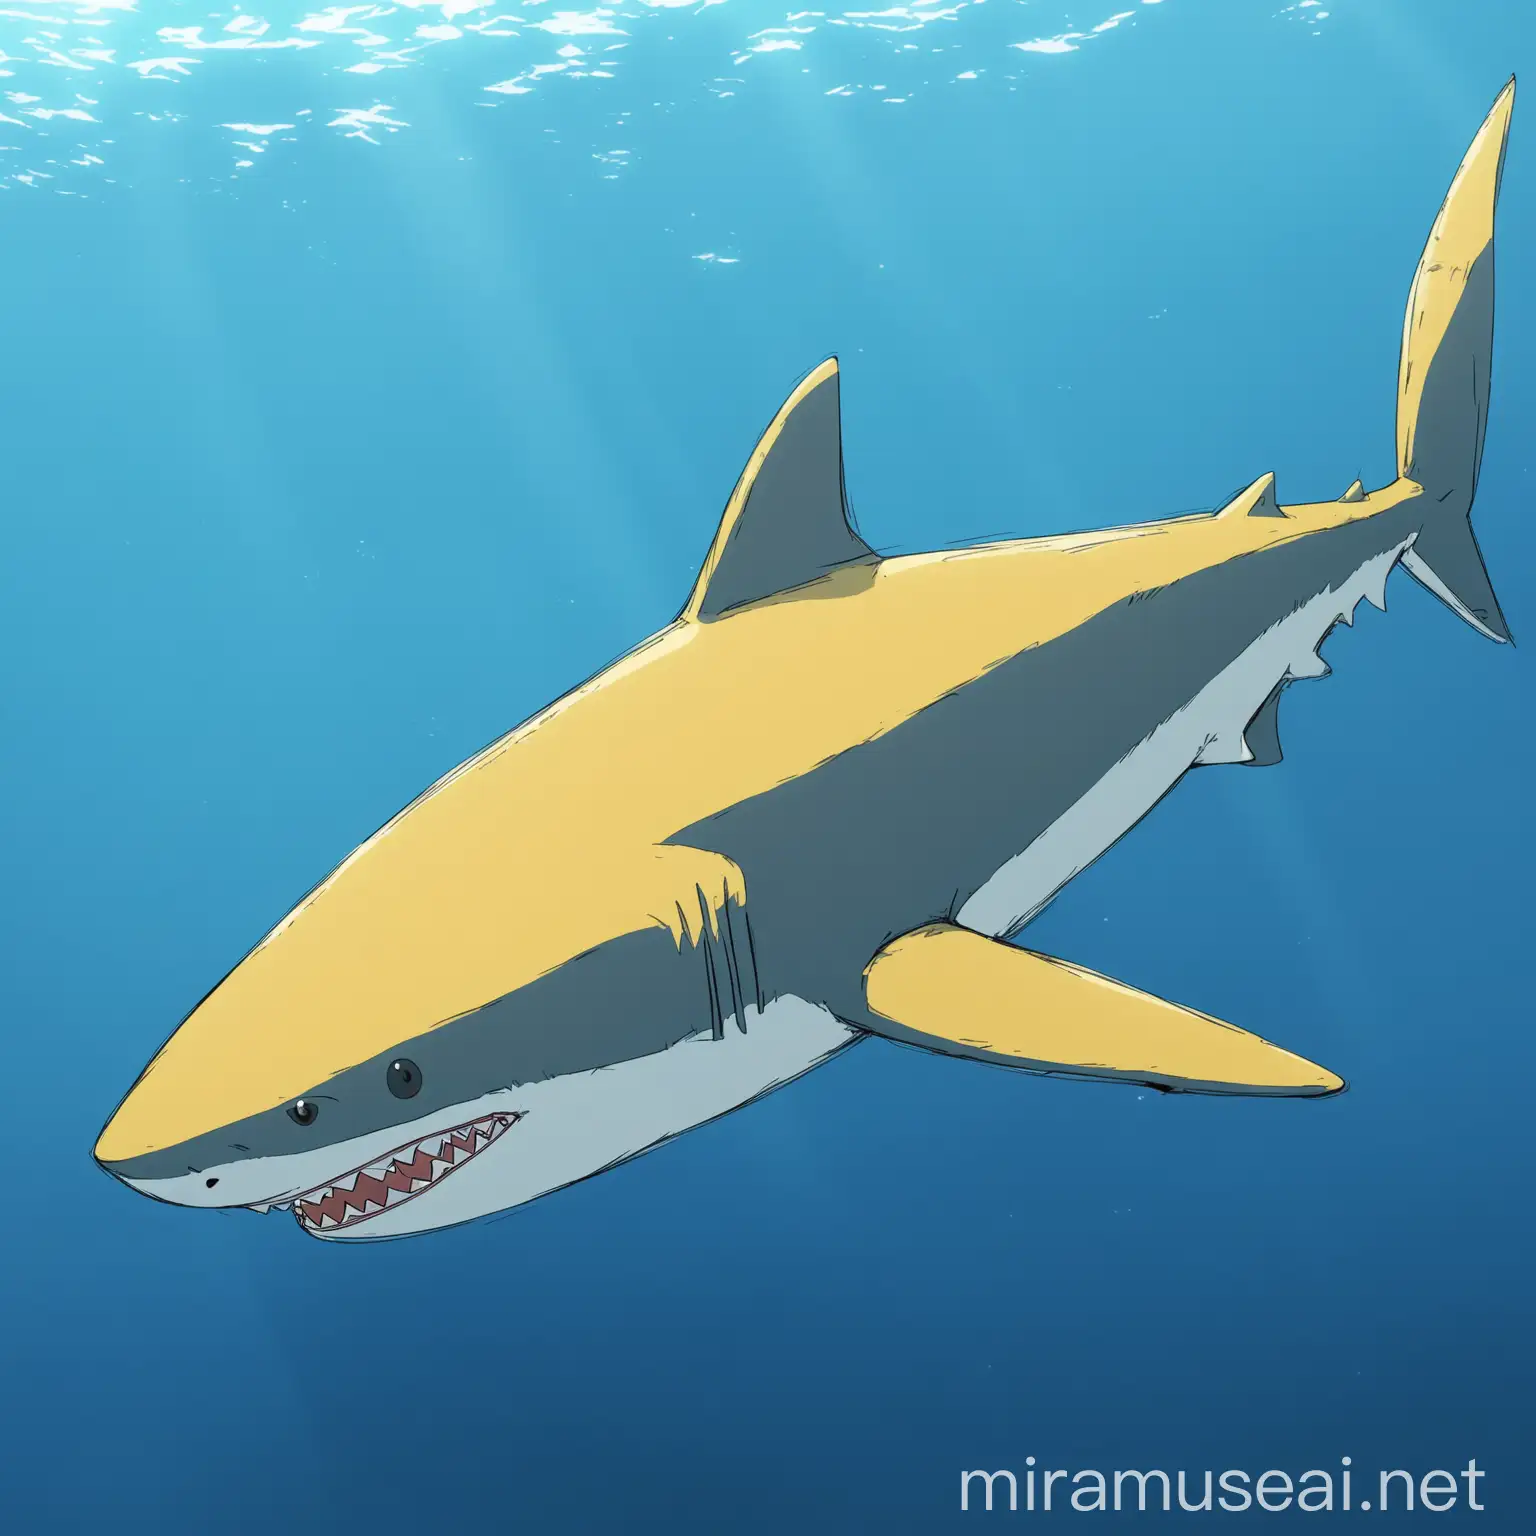 Anime Style Blue and Yellow Floating Shark Illustration